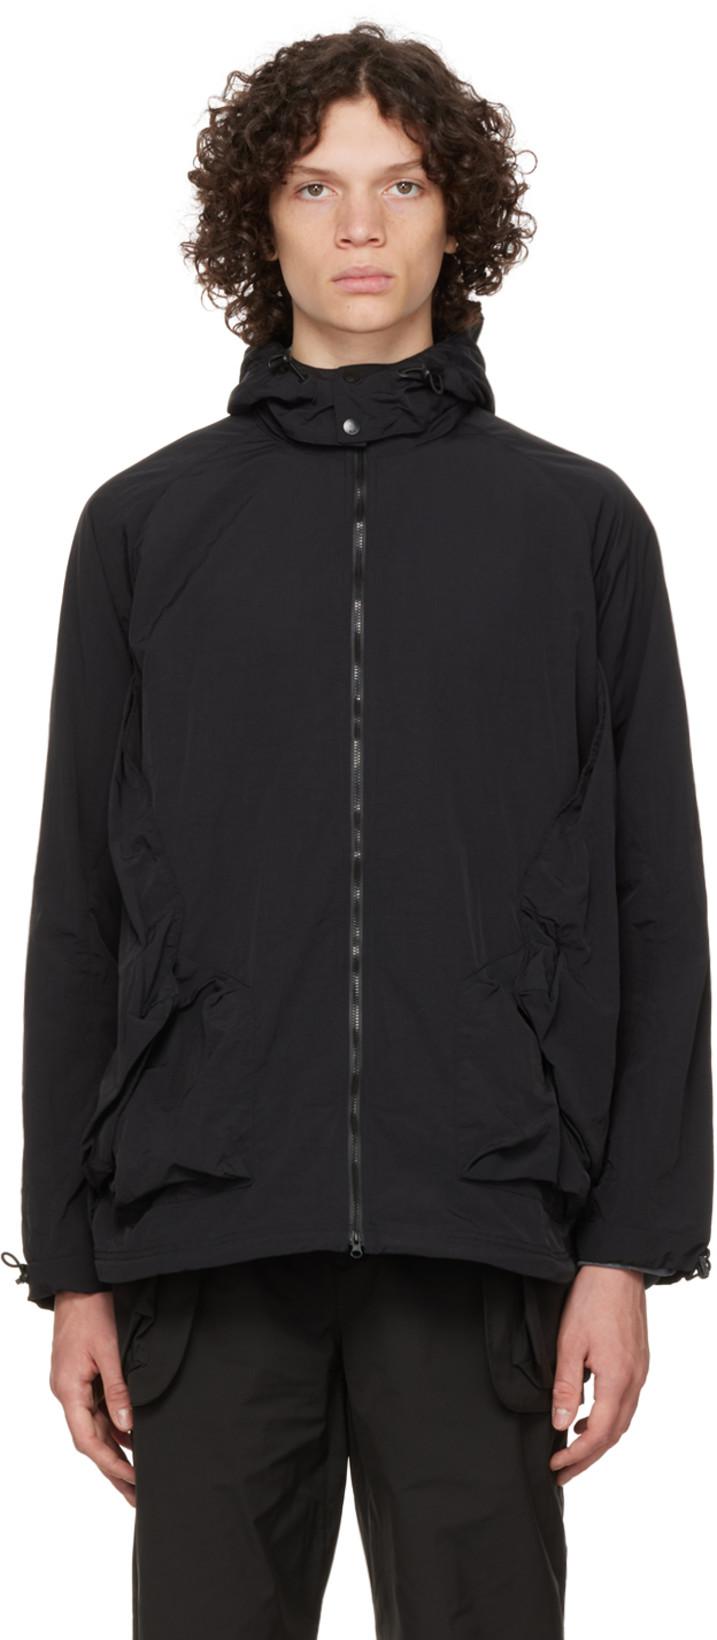 Black Pickable Windbreaker Packable Jacket by ARCHIVAL REINVENT